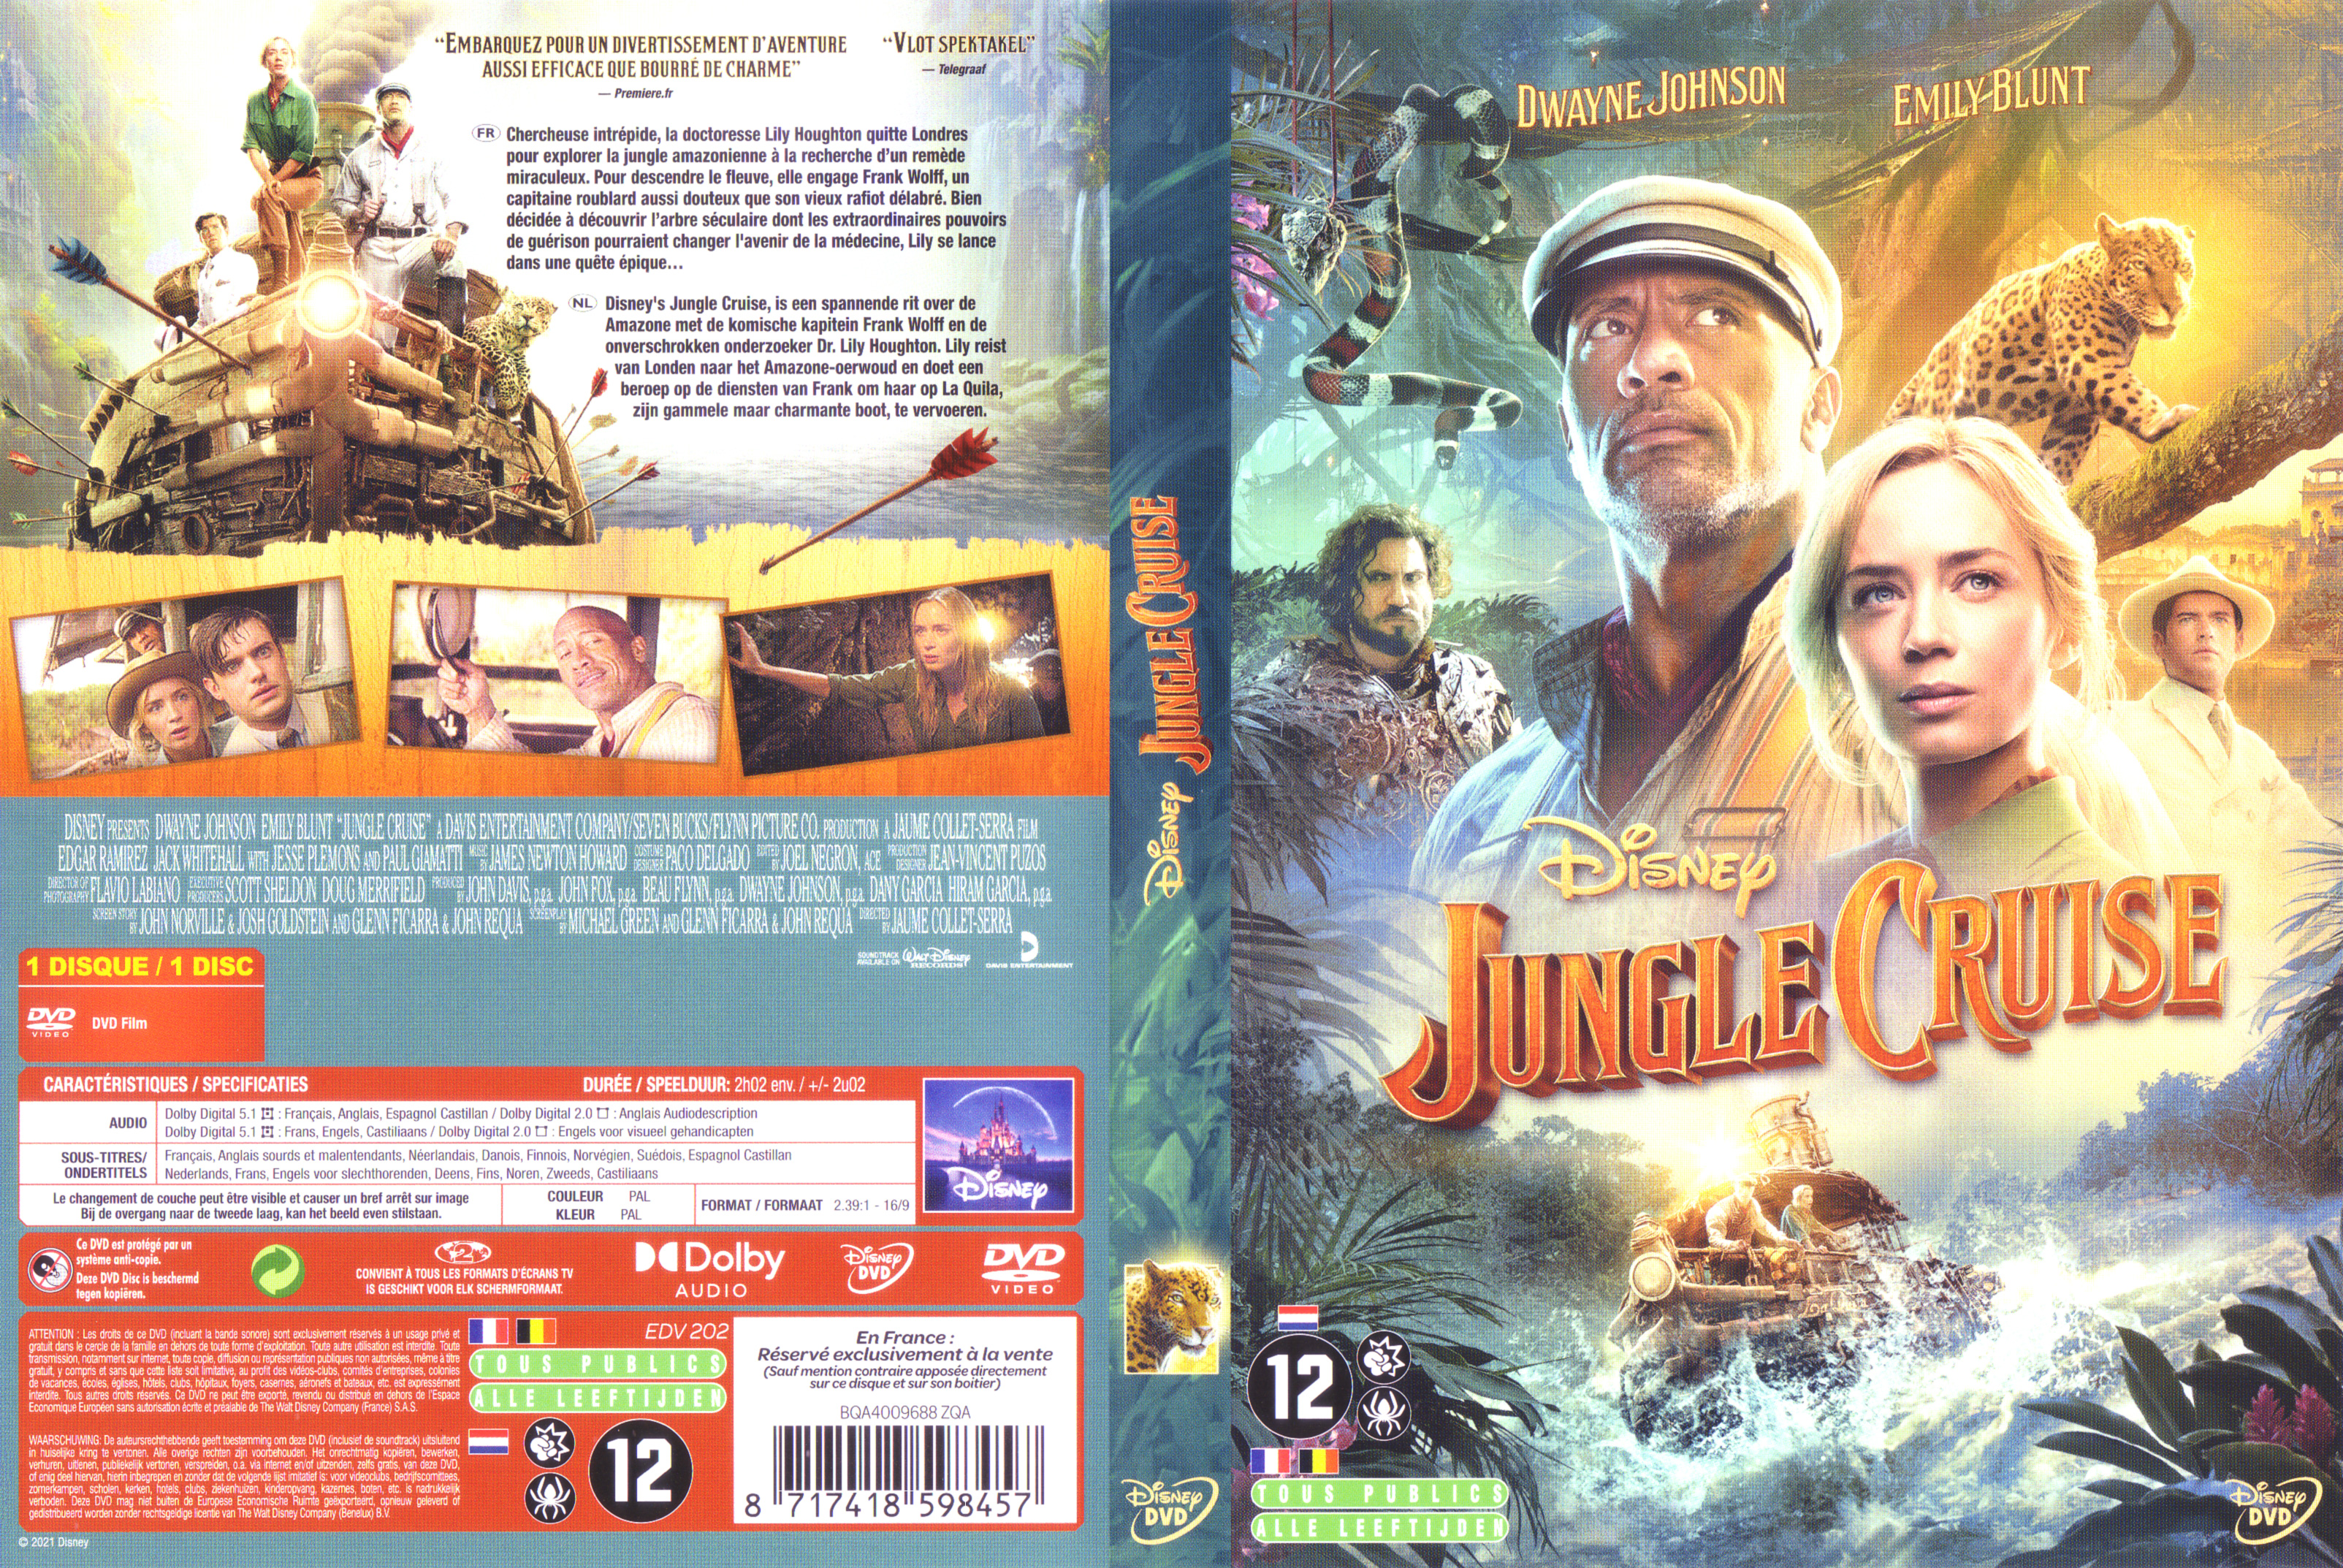 Jaquette DVD Jungle cruise